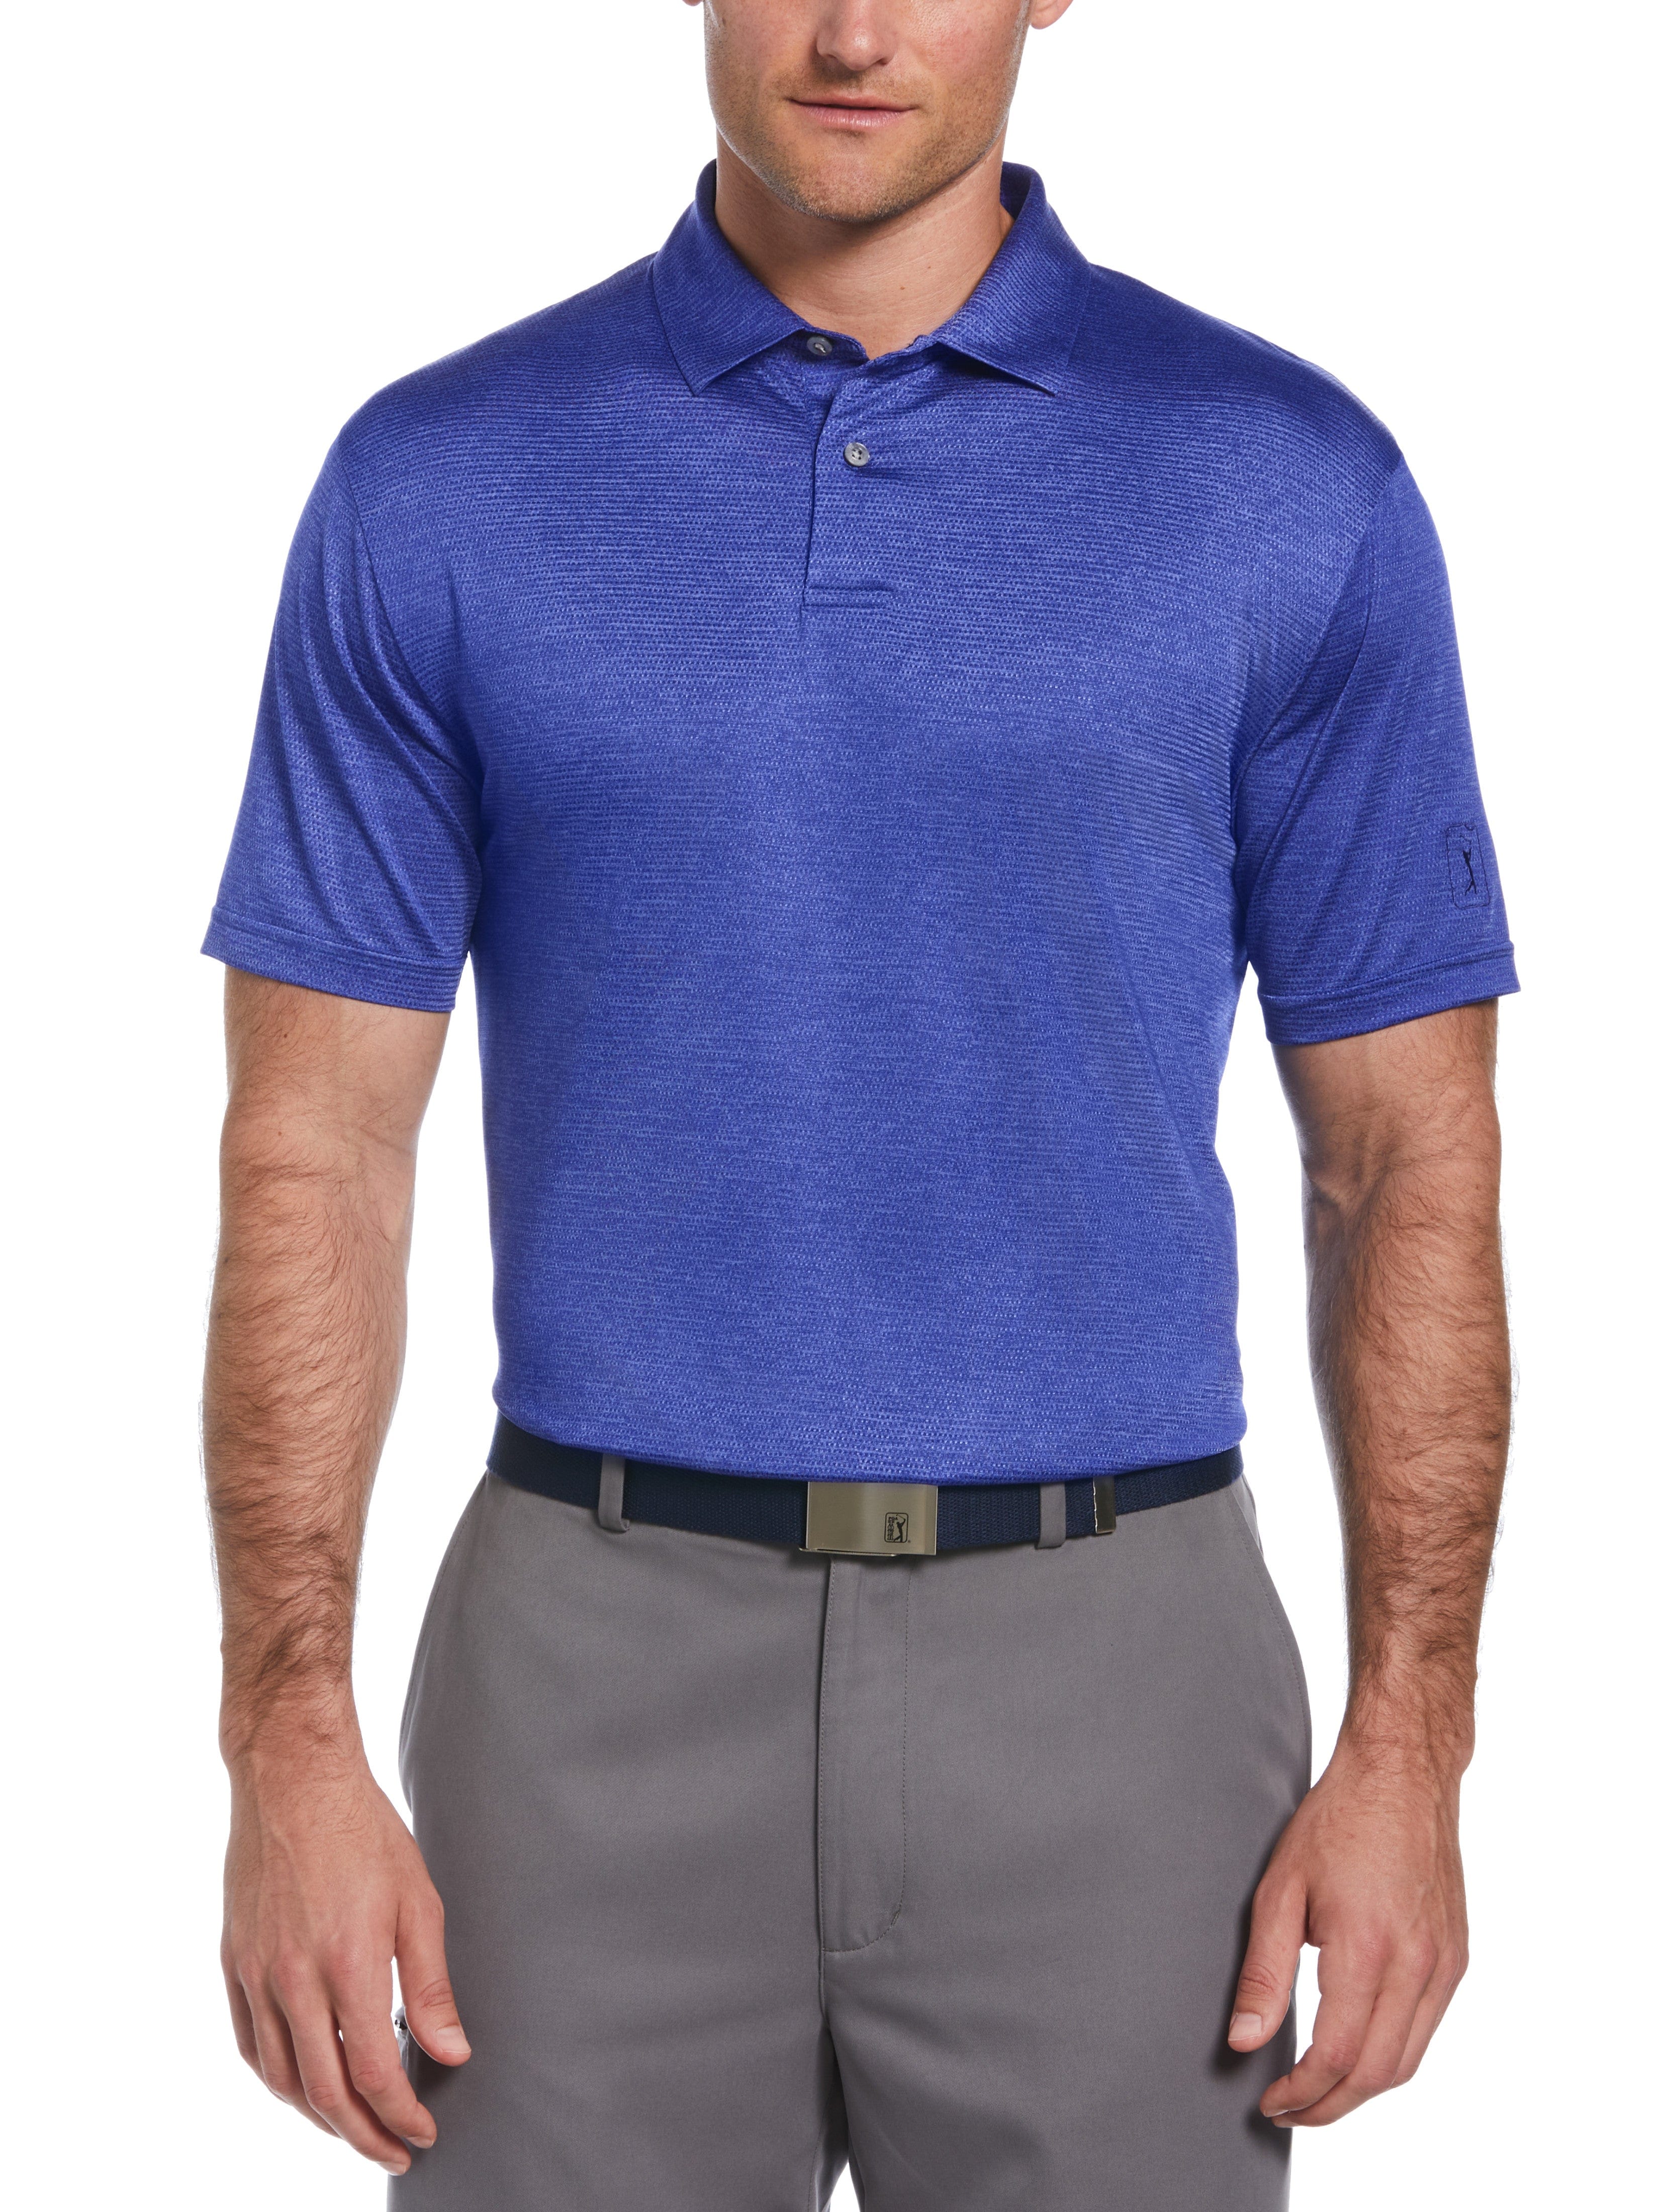 PGA TOUR Apparel Mens Space Dye Texture Golf Polo Shirt, Size Medium, Light Dazzling Blue Heather, 100% Polyester | Golf Apparel Shop